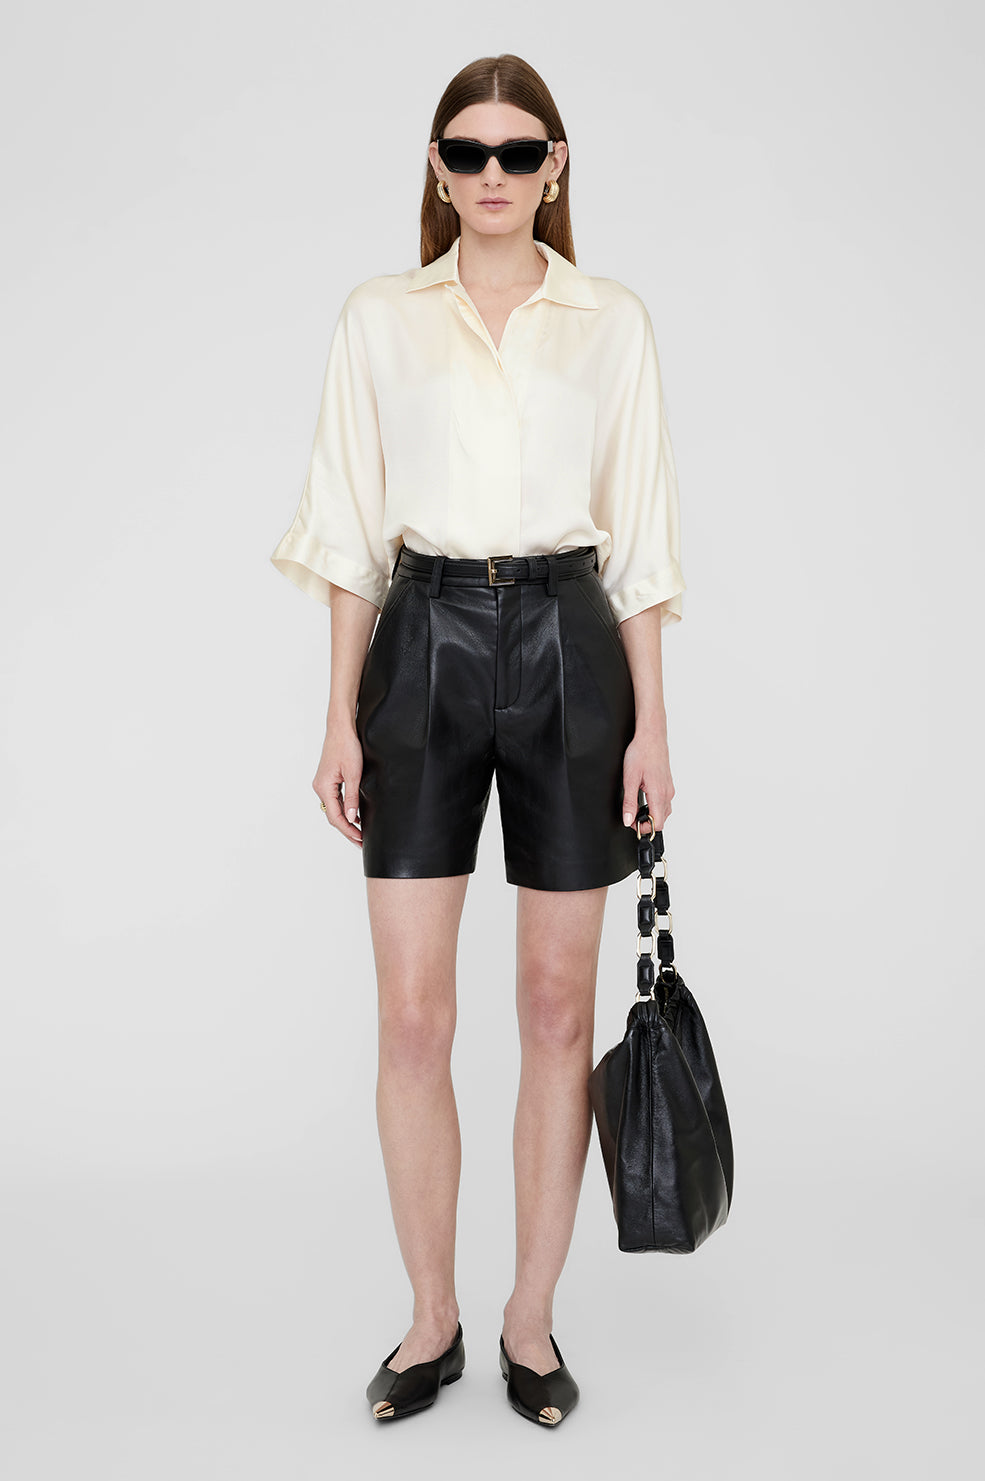 ANINE BING Julia Shirt - Ivory - On Model Front Second Image